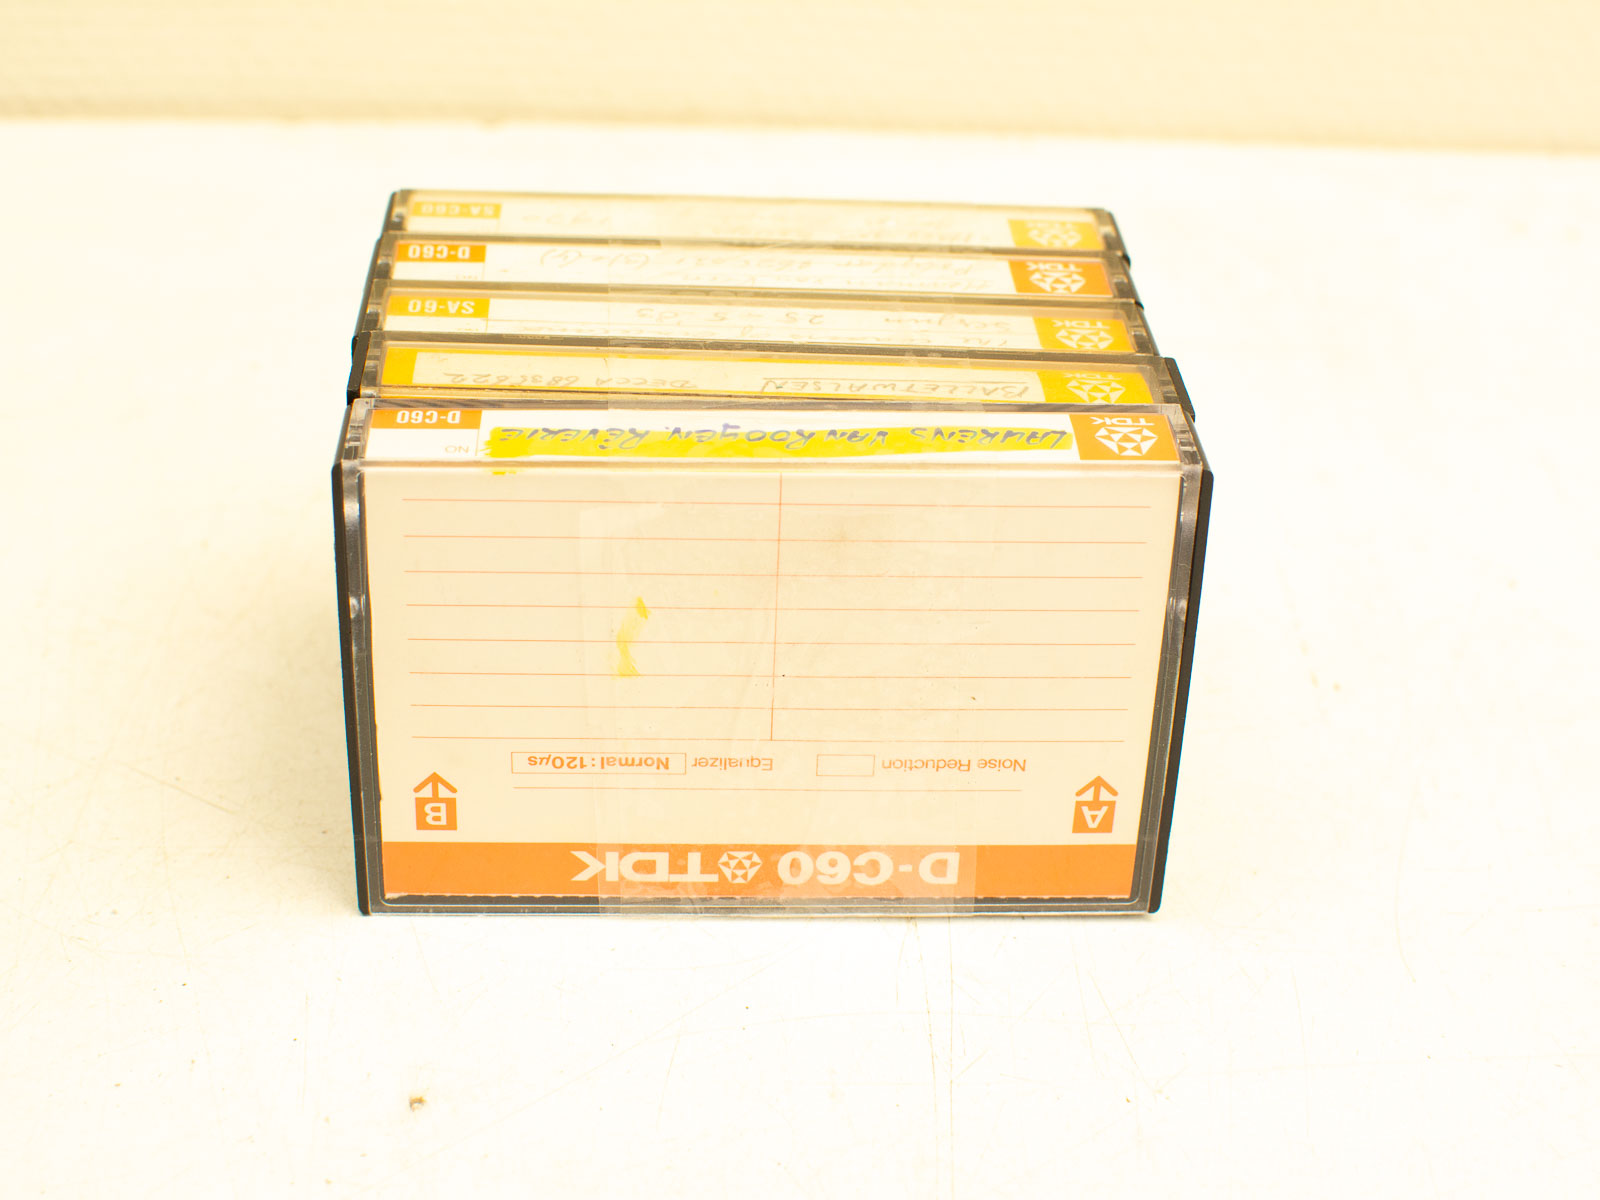 5 Tdk cassettebandjes 31357